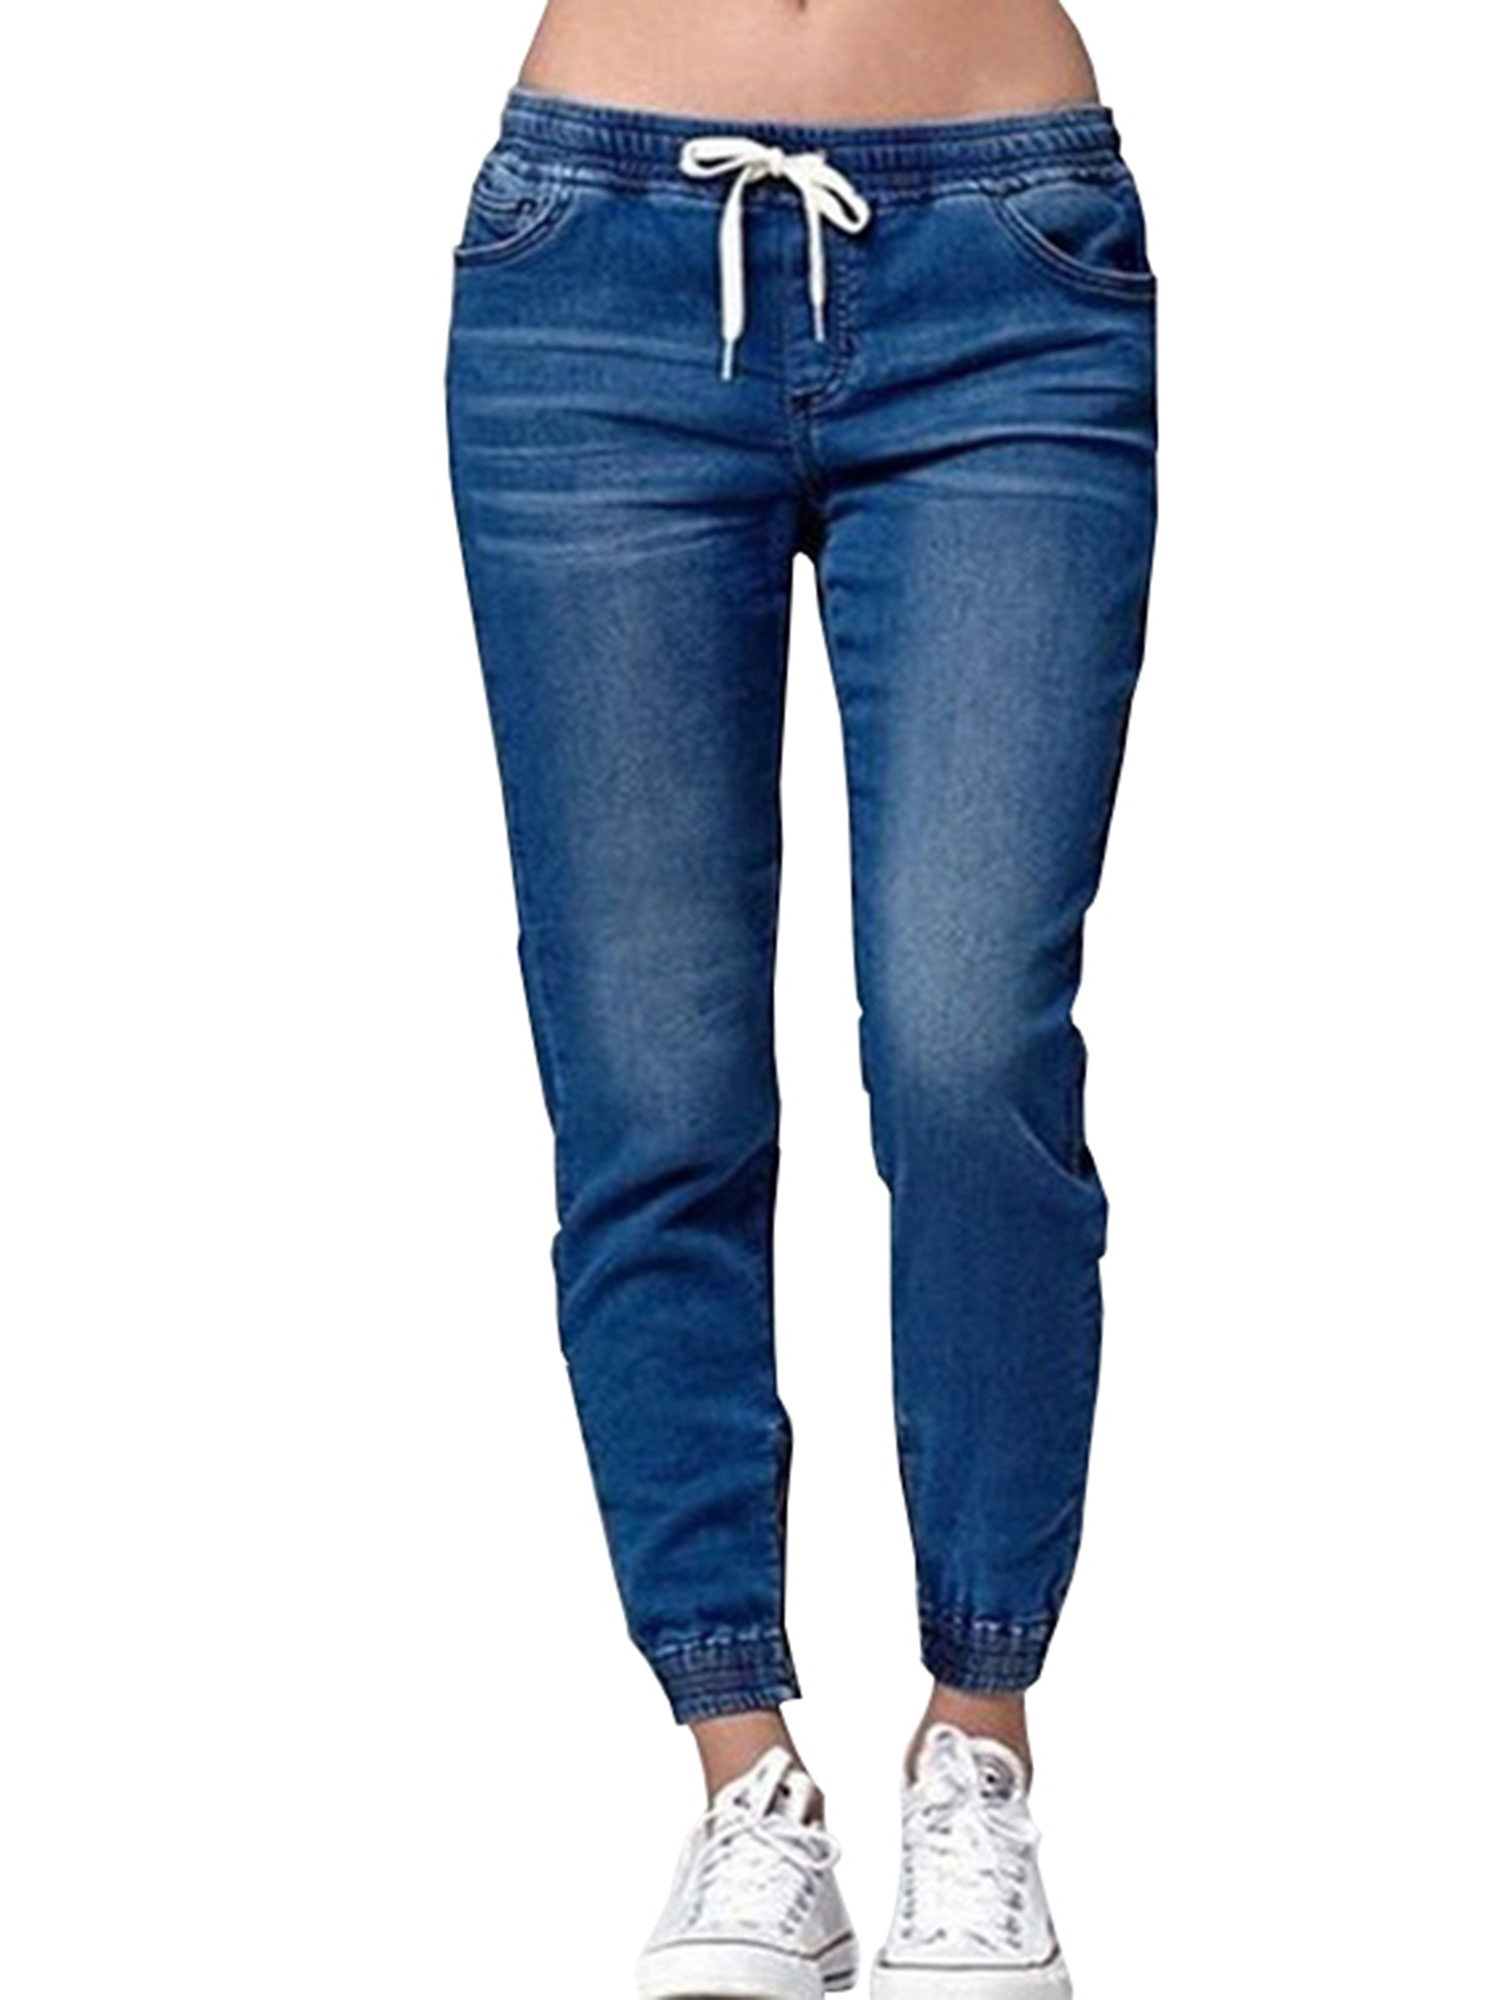 Plus Size Jeans for Women Mid Rise Slim Fit Joggers Denim Pants Casual Jeggings Drawstring Stretch Pants S-5XL Light Blue 2XL - image 1 of 4